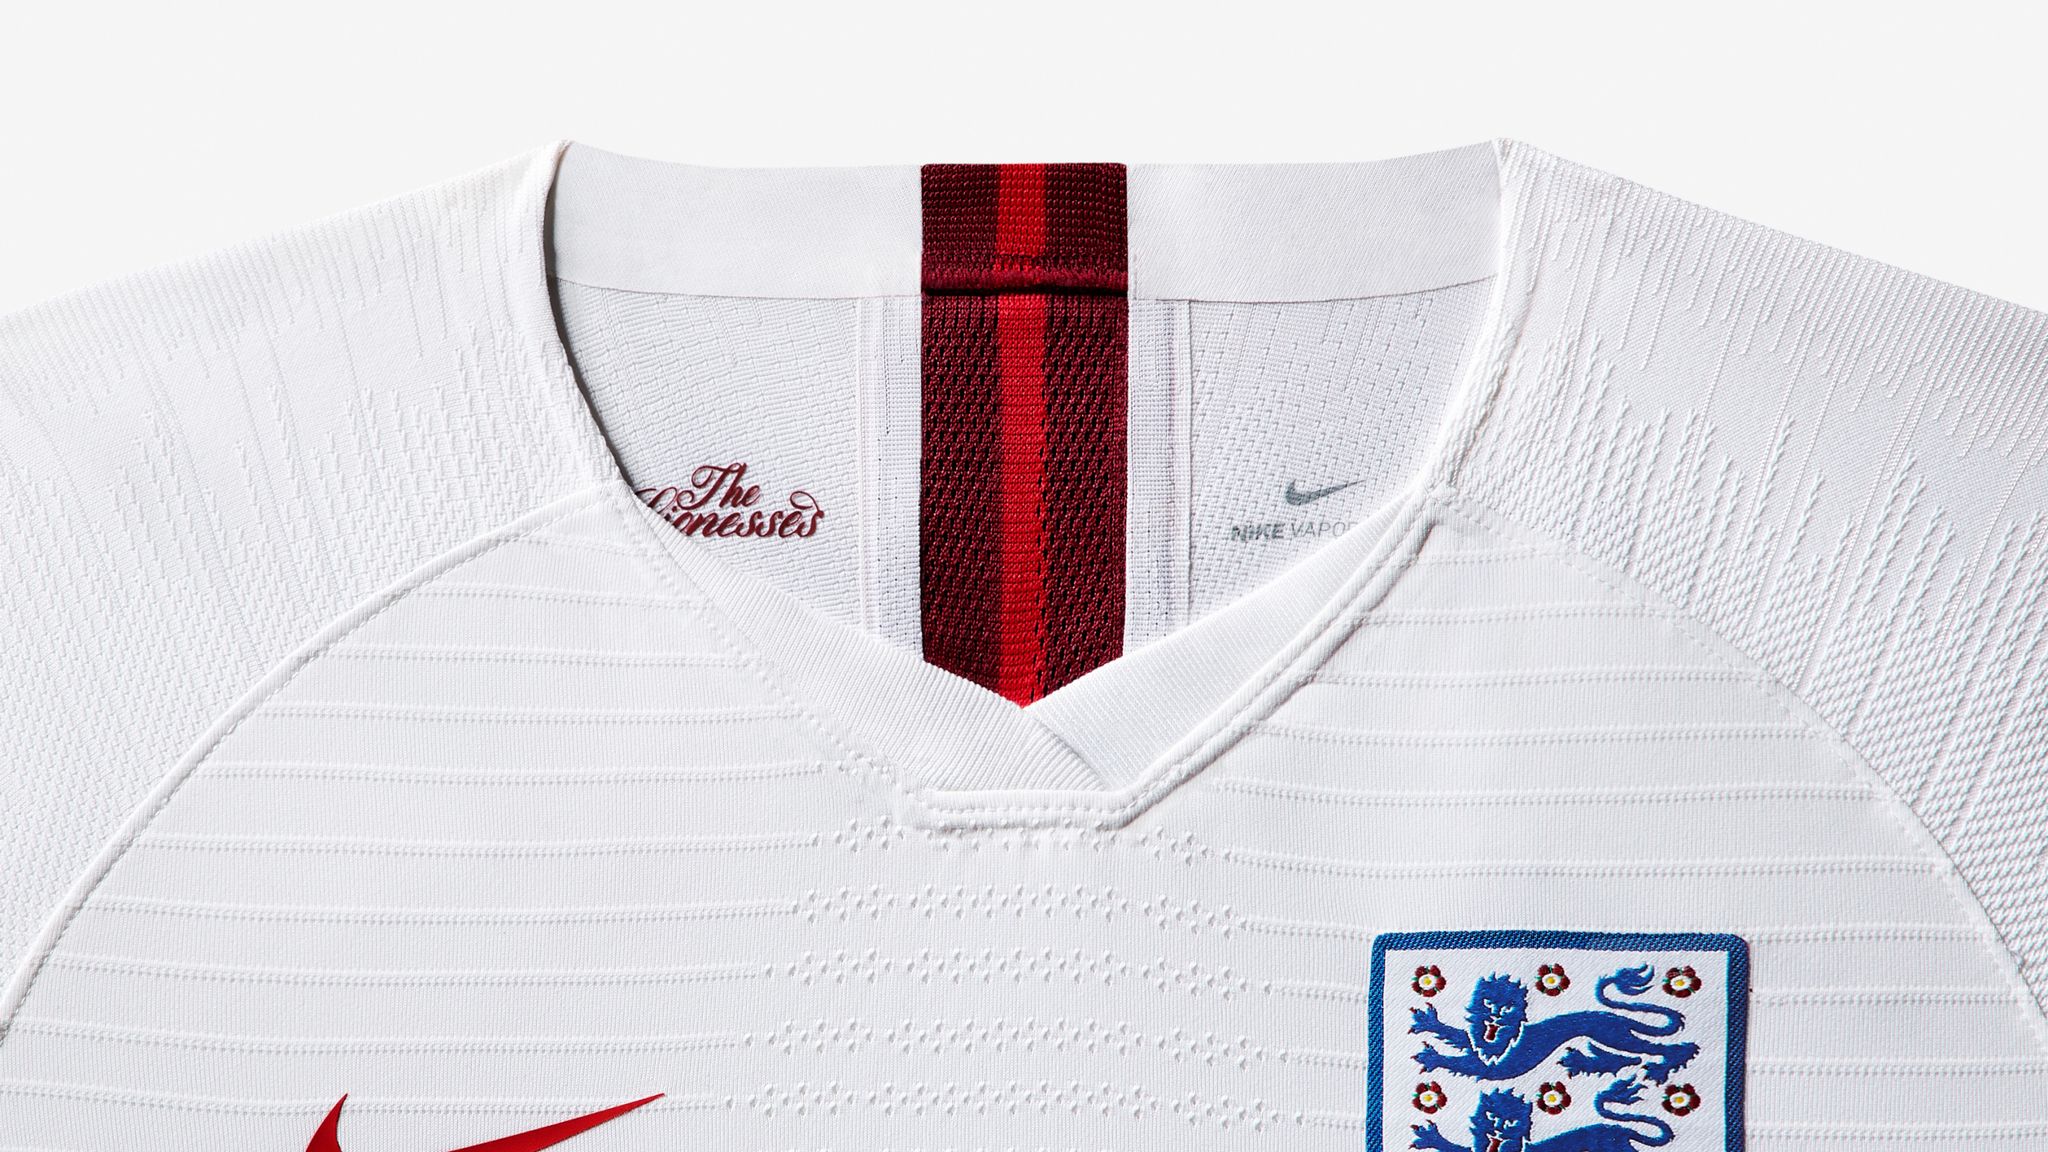 England Women's World Cup 2019 kit revealed  Football News  Sky Sports